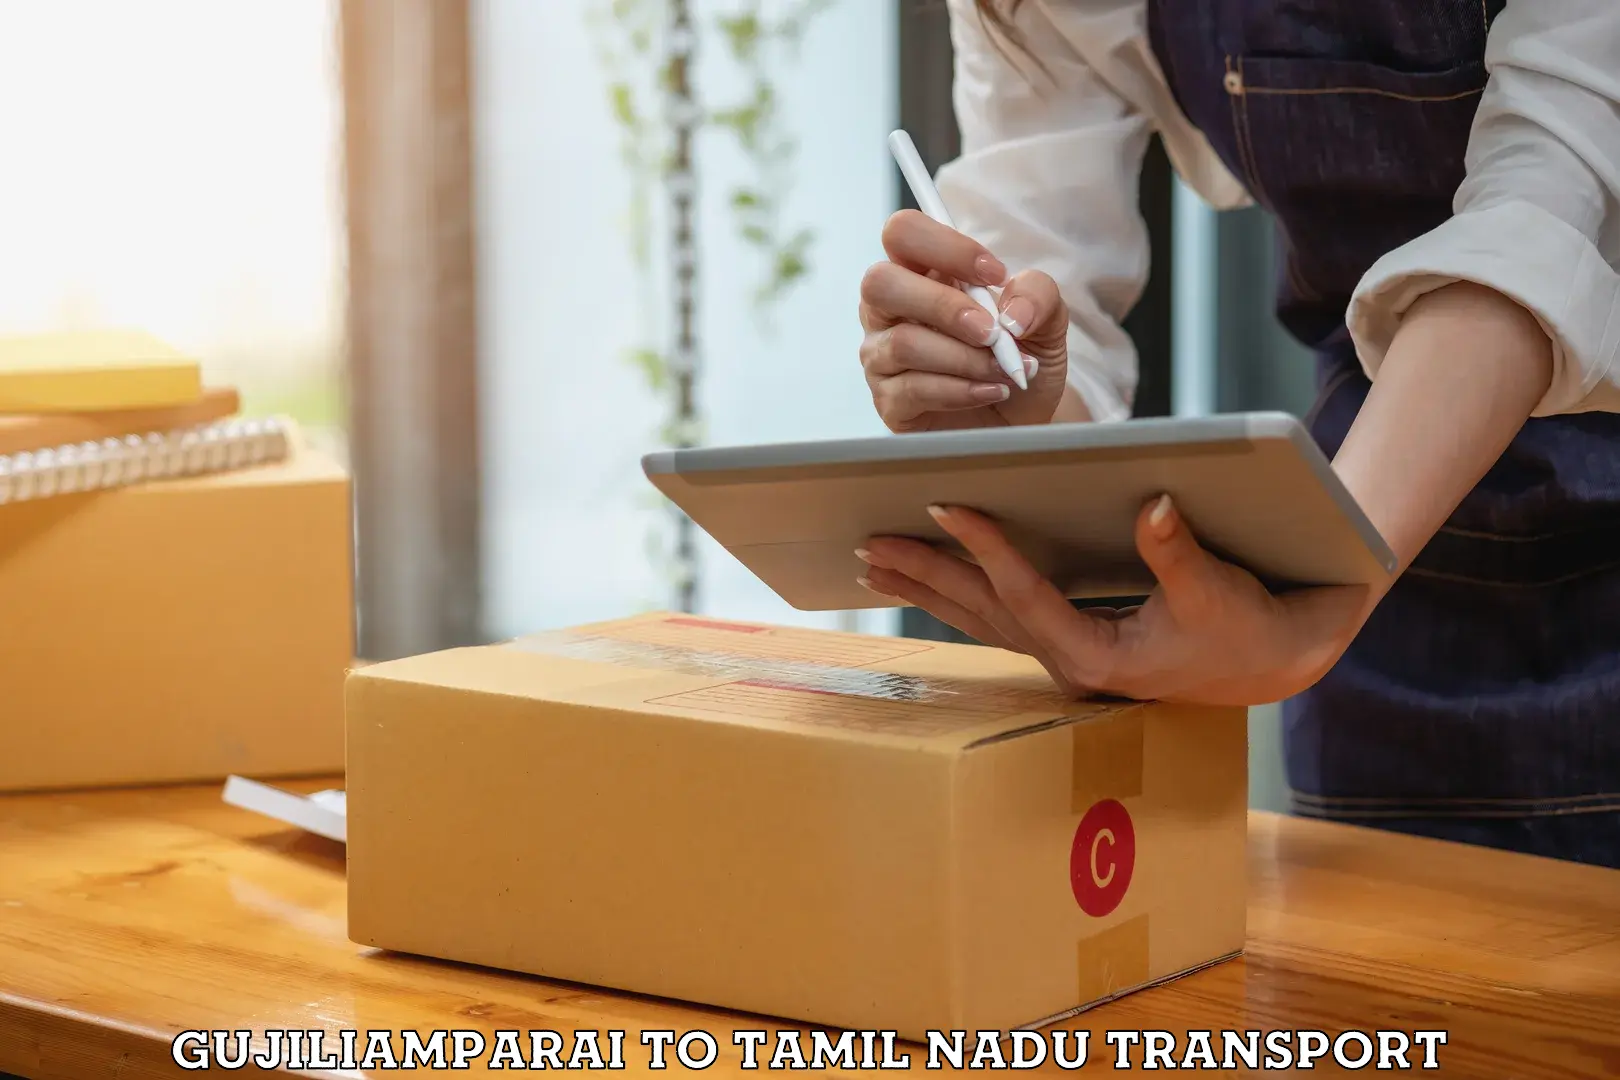 Delivery service Gujiliamparai to Tamil Nadu